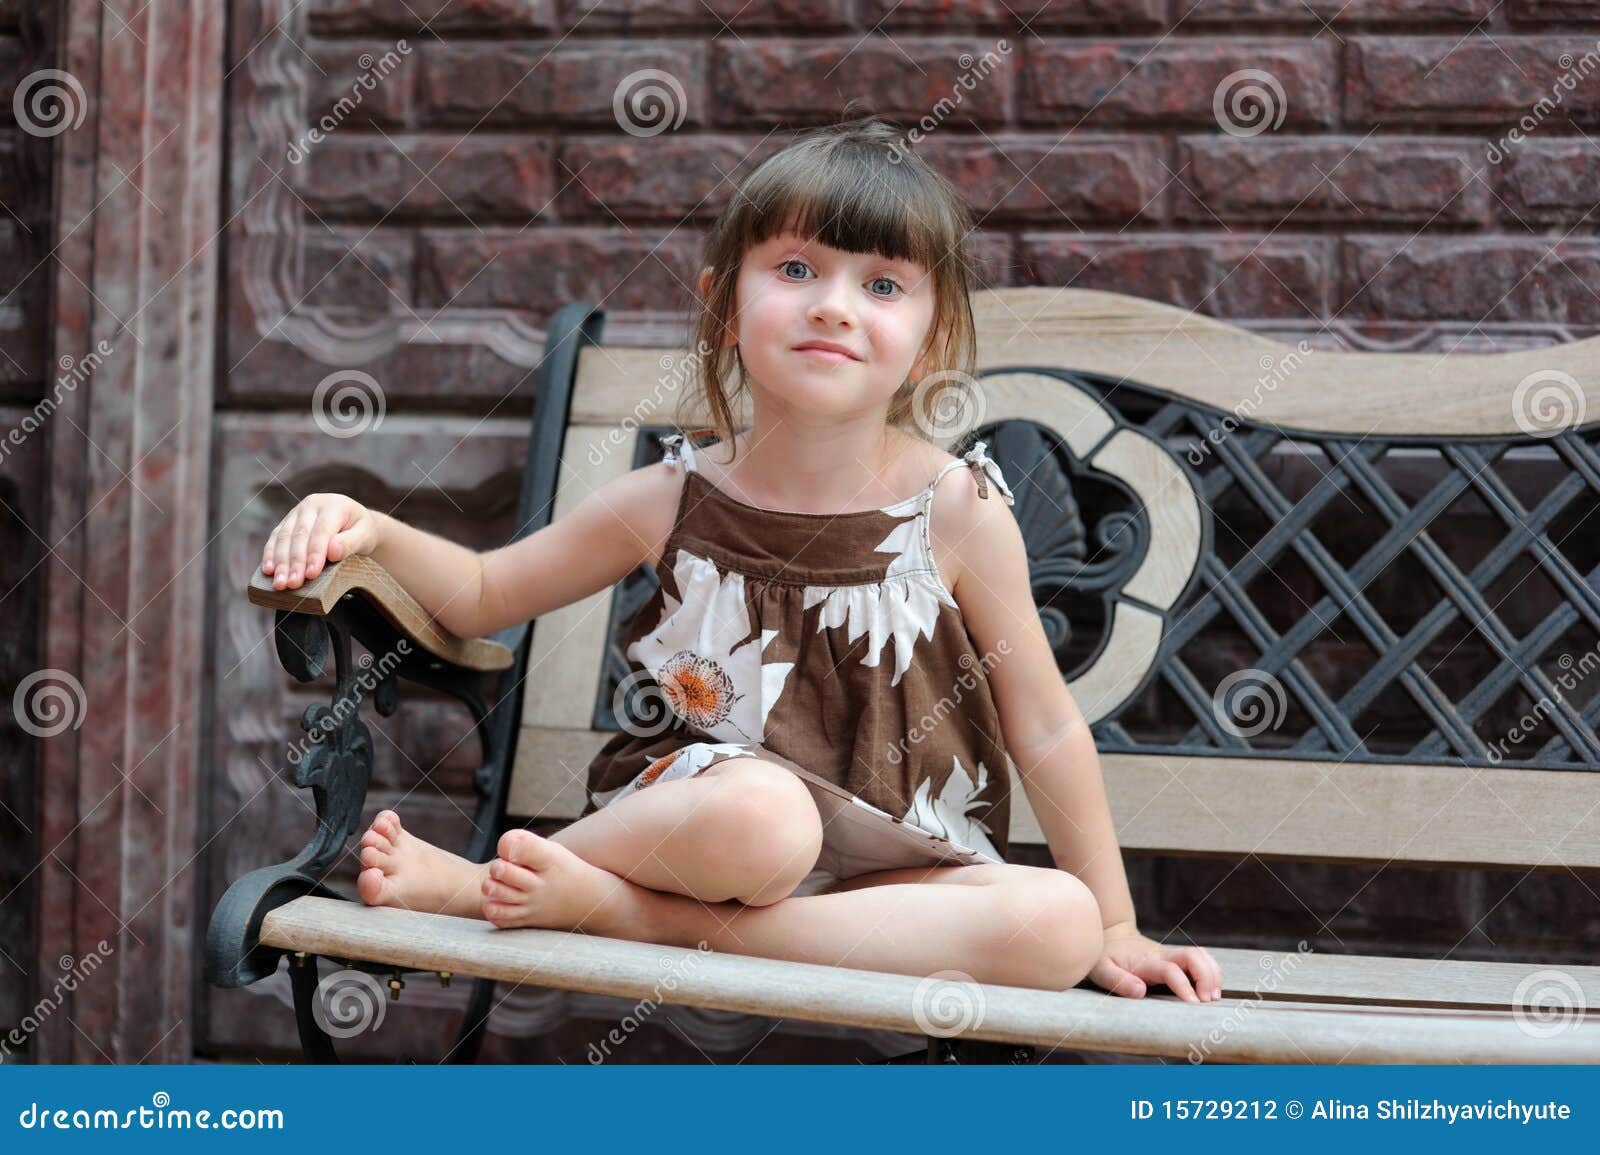 nice toddler girl on bench